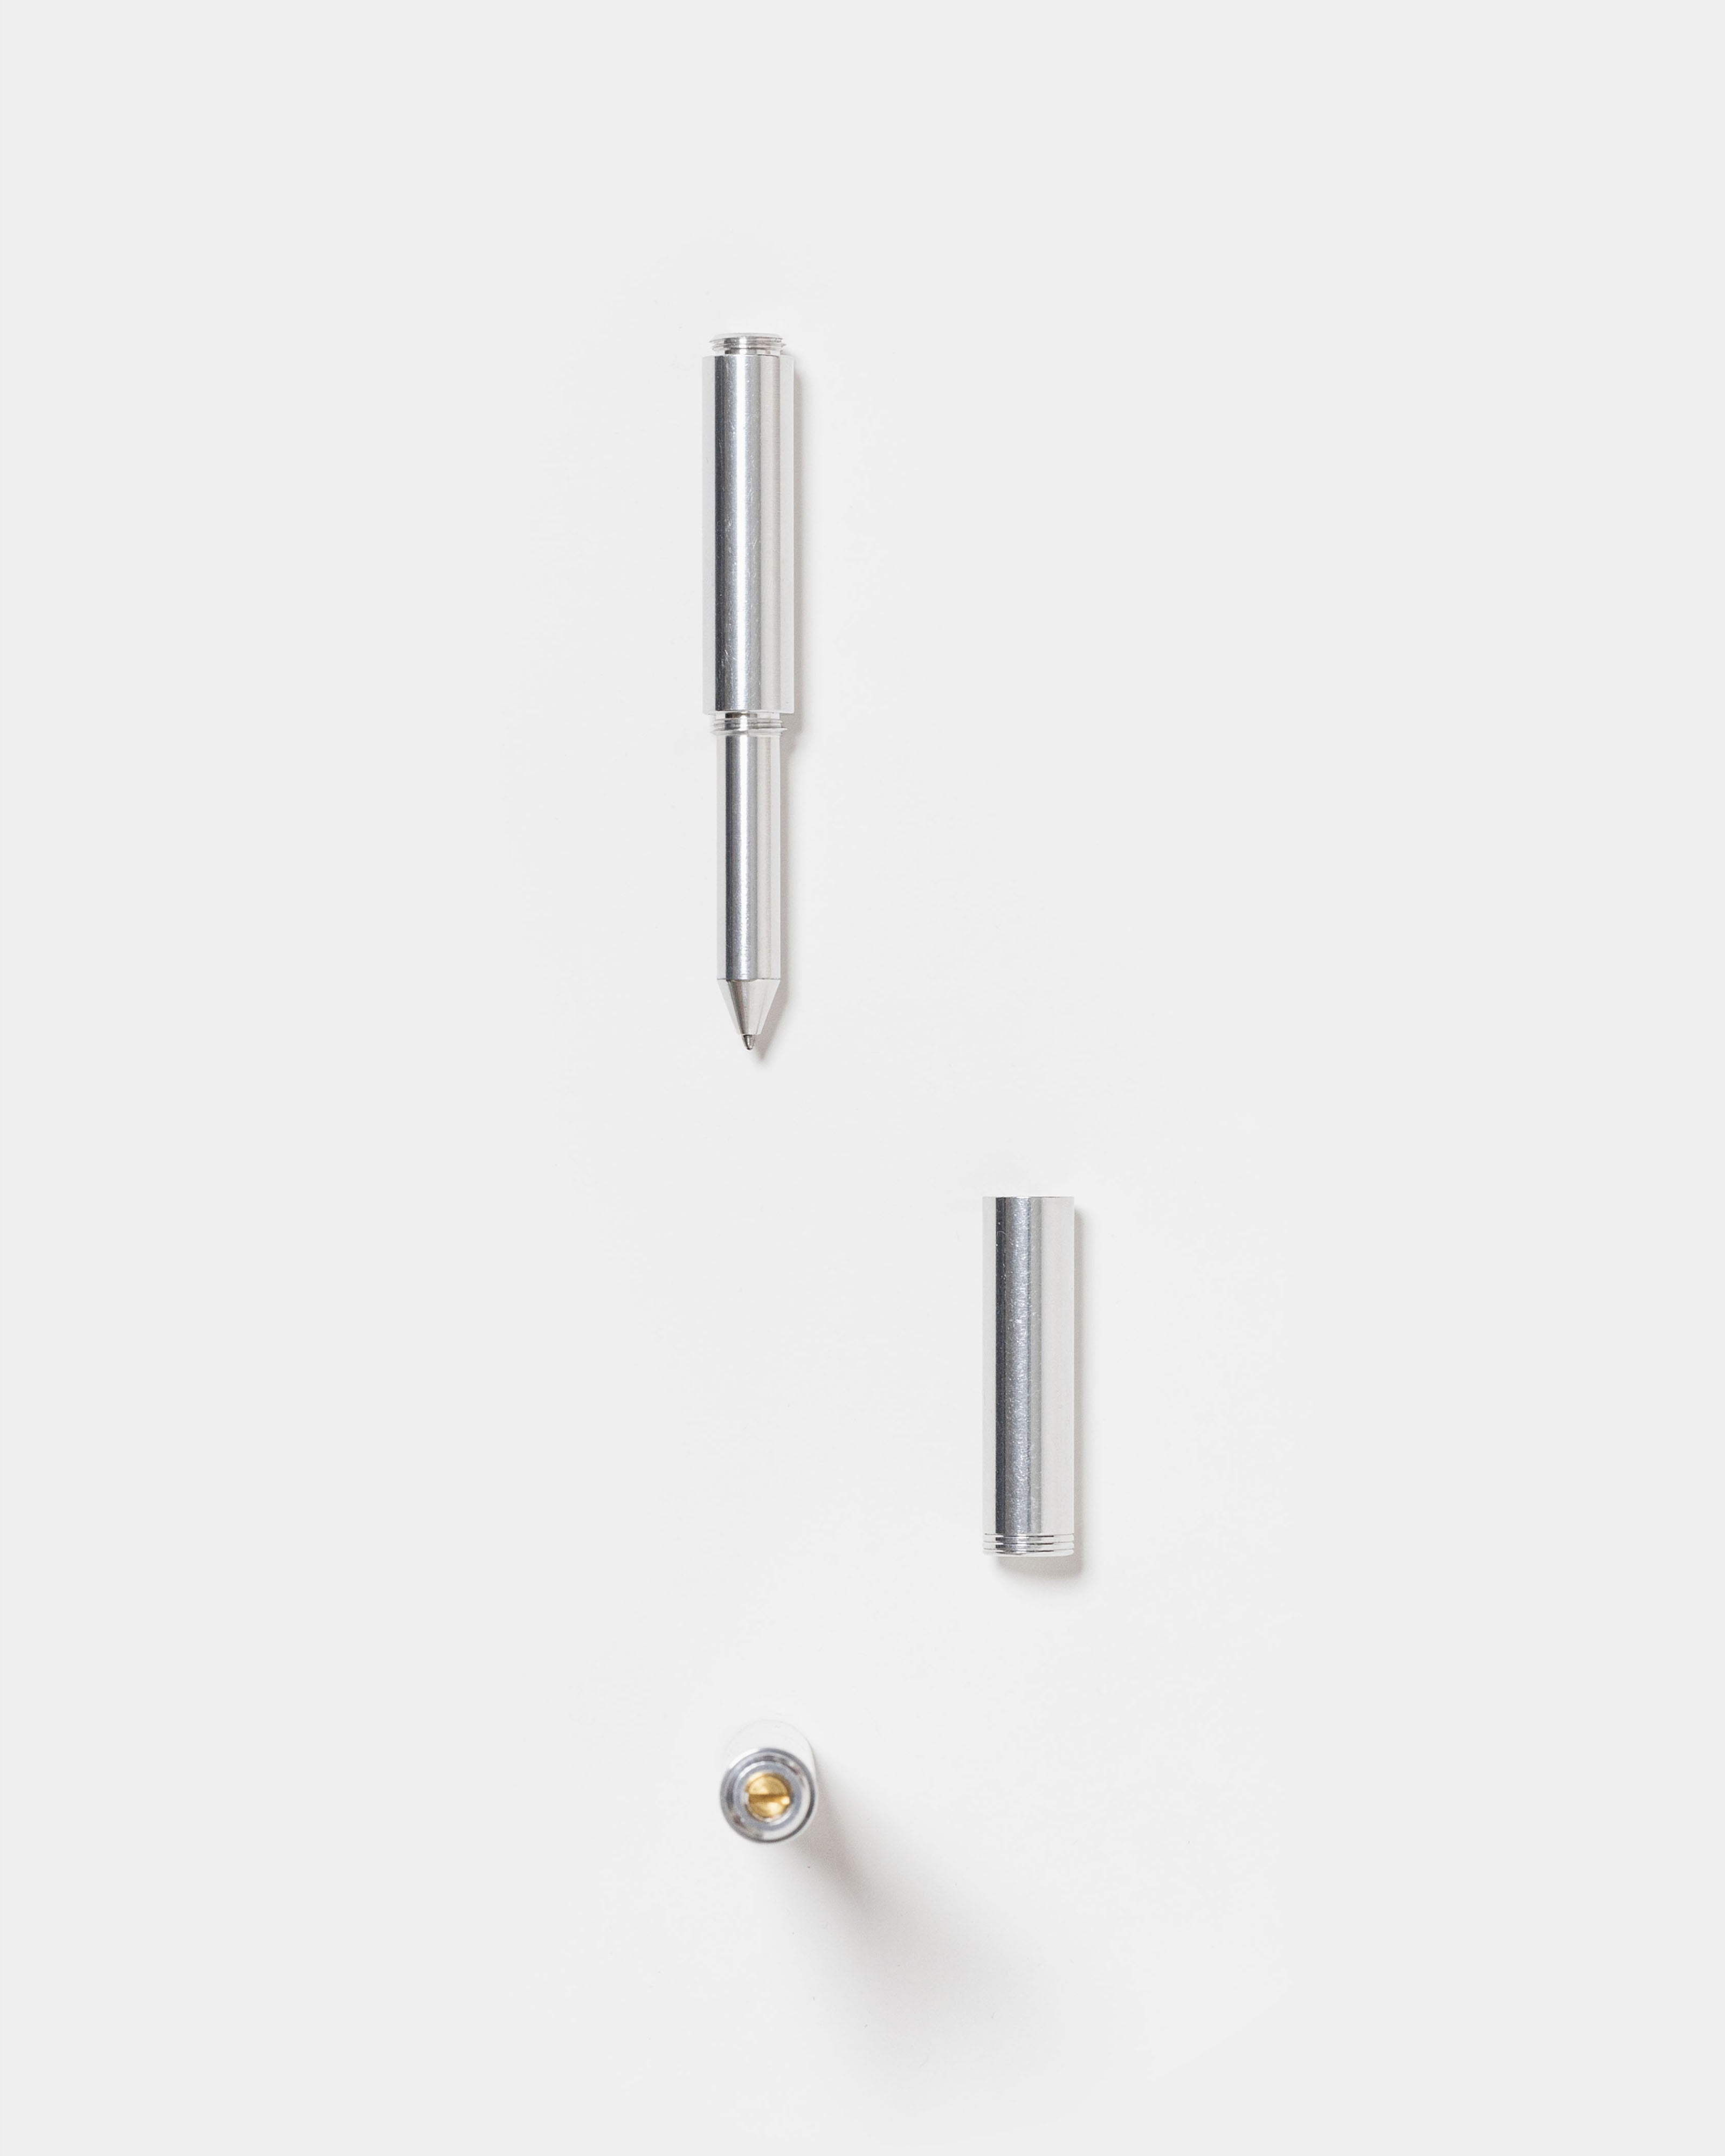 Pens by Schon Design - 457 ANEW | Atelier IV V VII Inc.